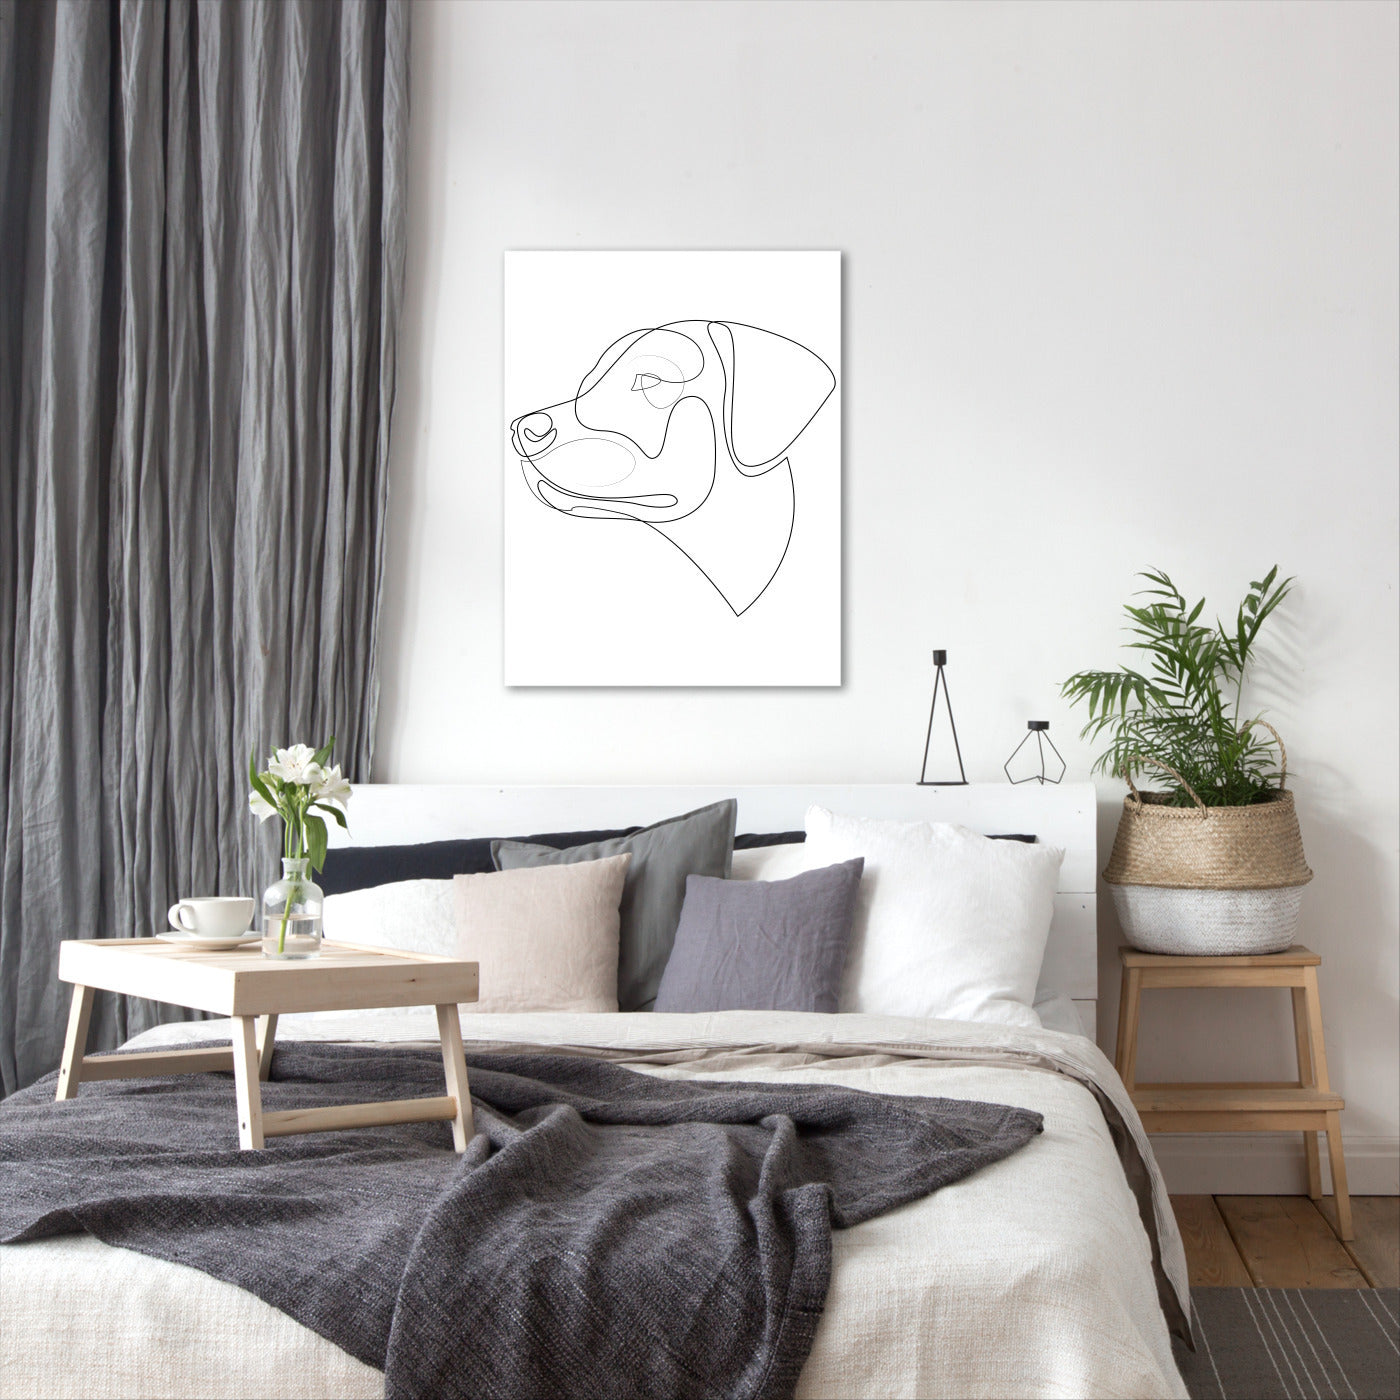 Labrador Retriever One Line by Addillum - Canvas, Poster or Framed Print